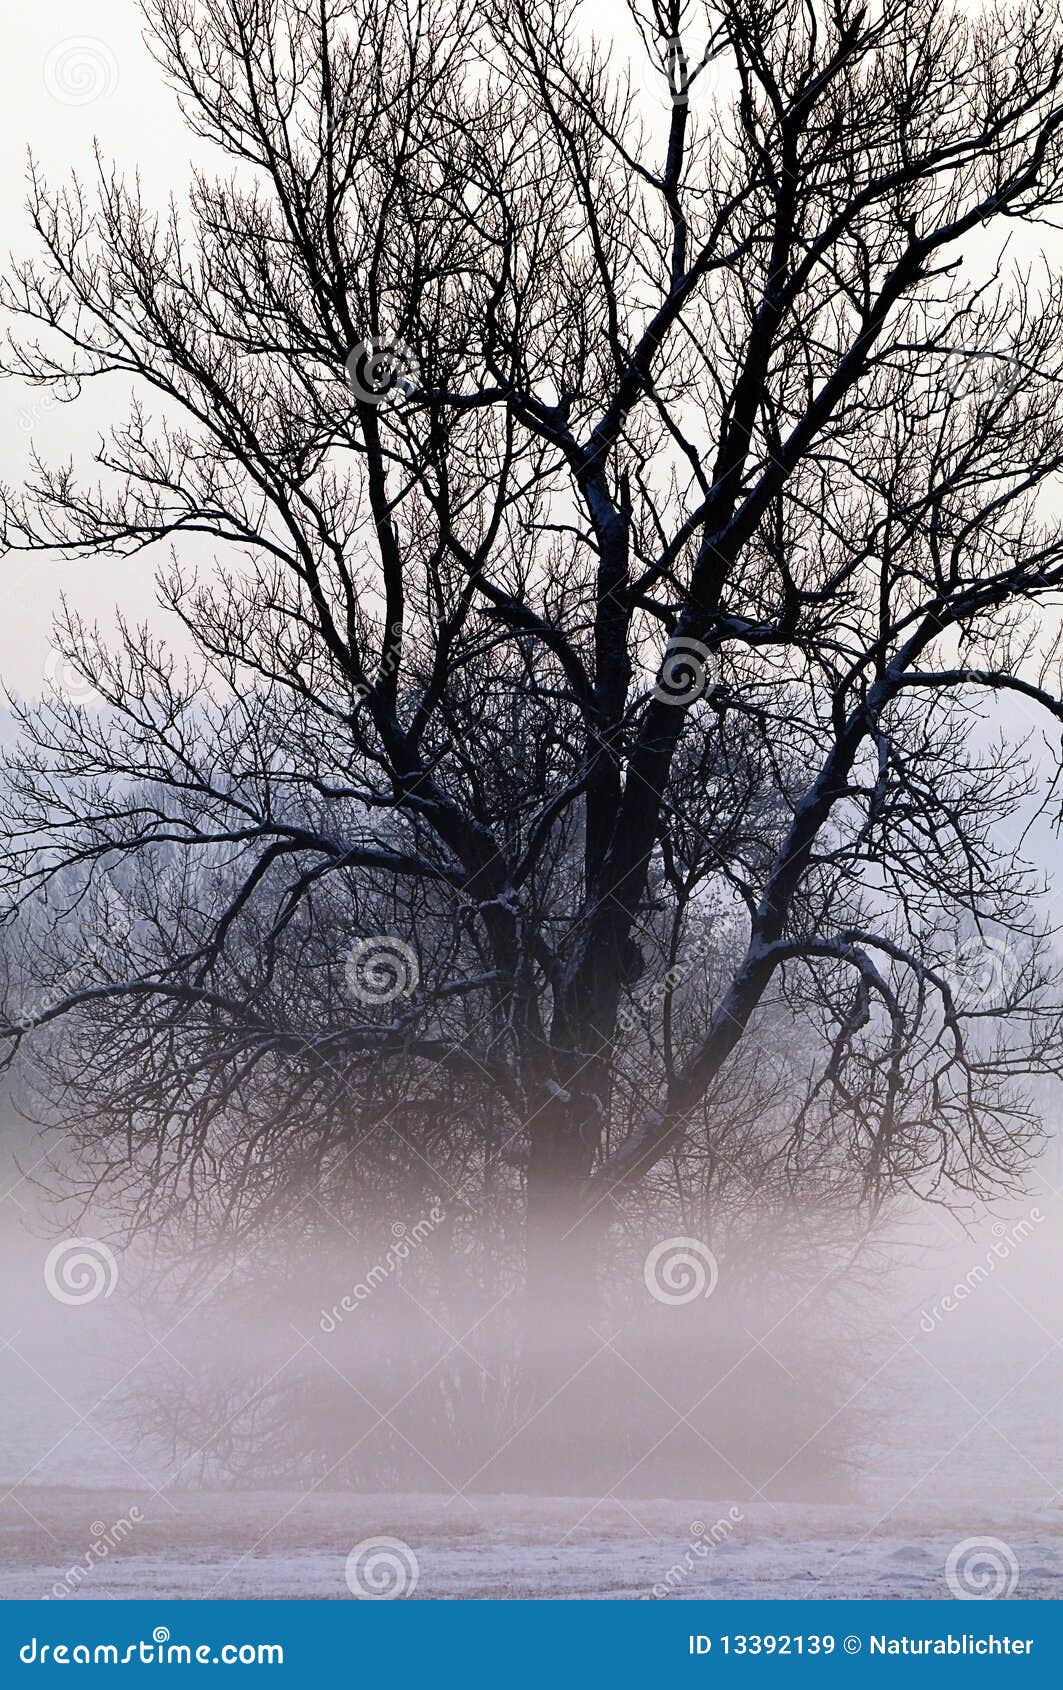 tree shrouded in mist